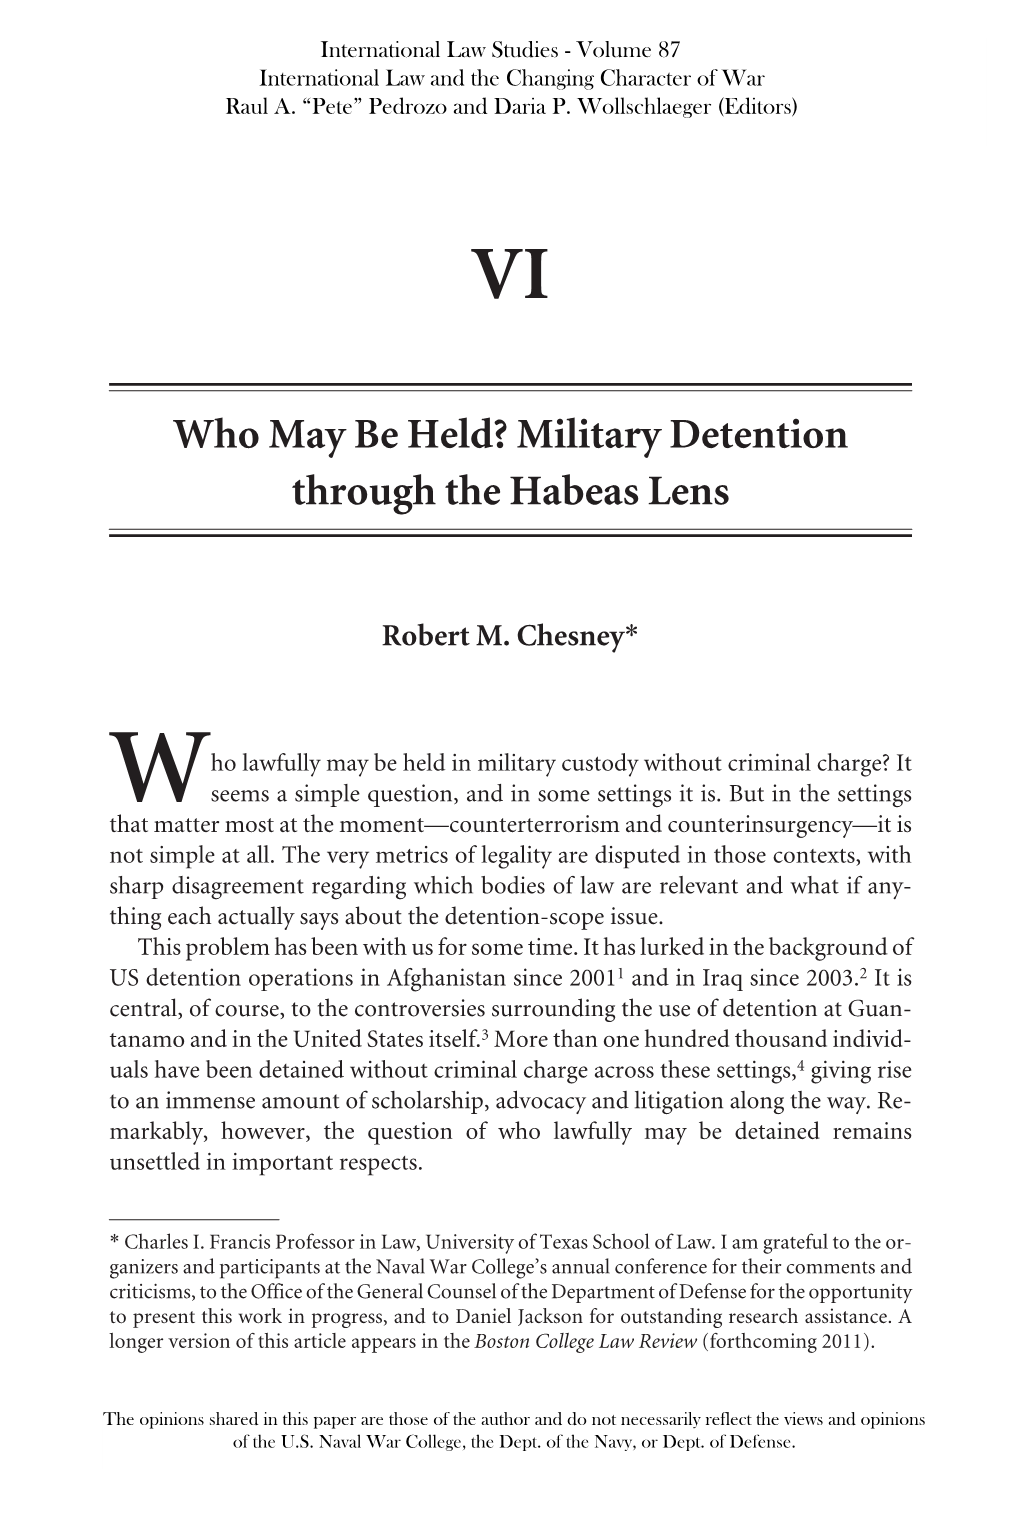 Military Detention Through the Habeas Lens